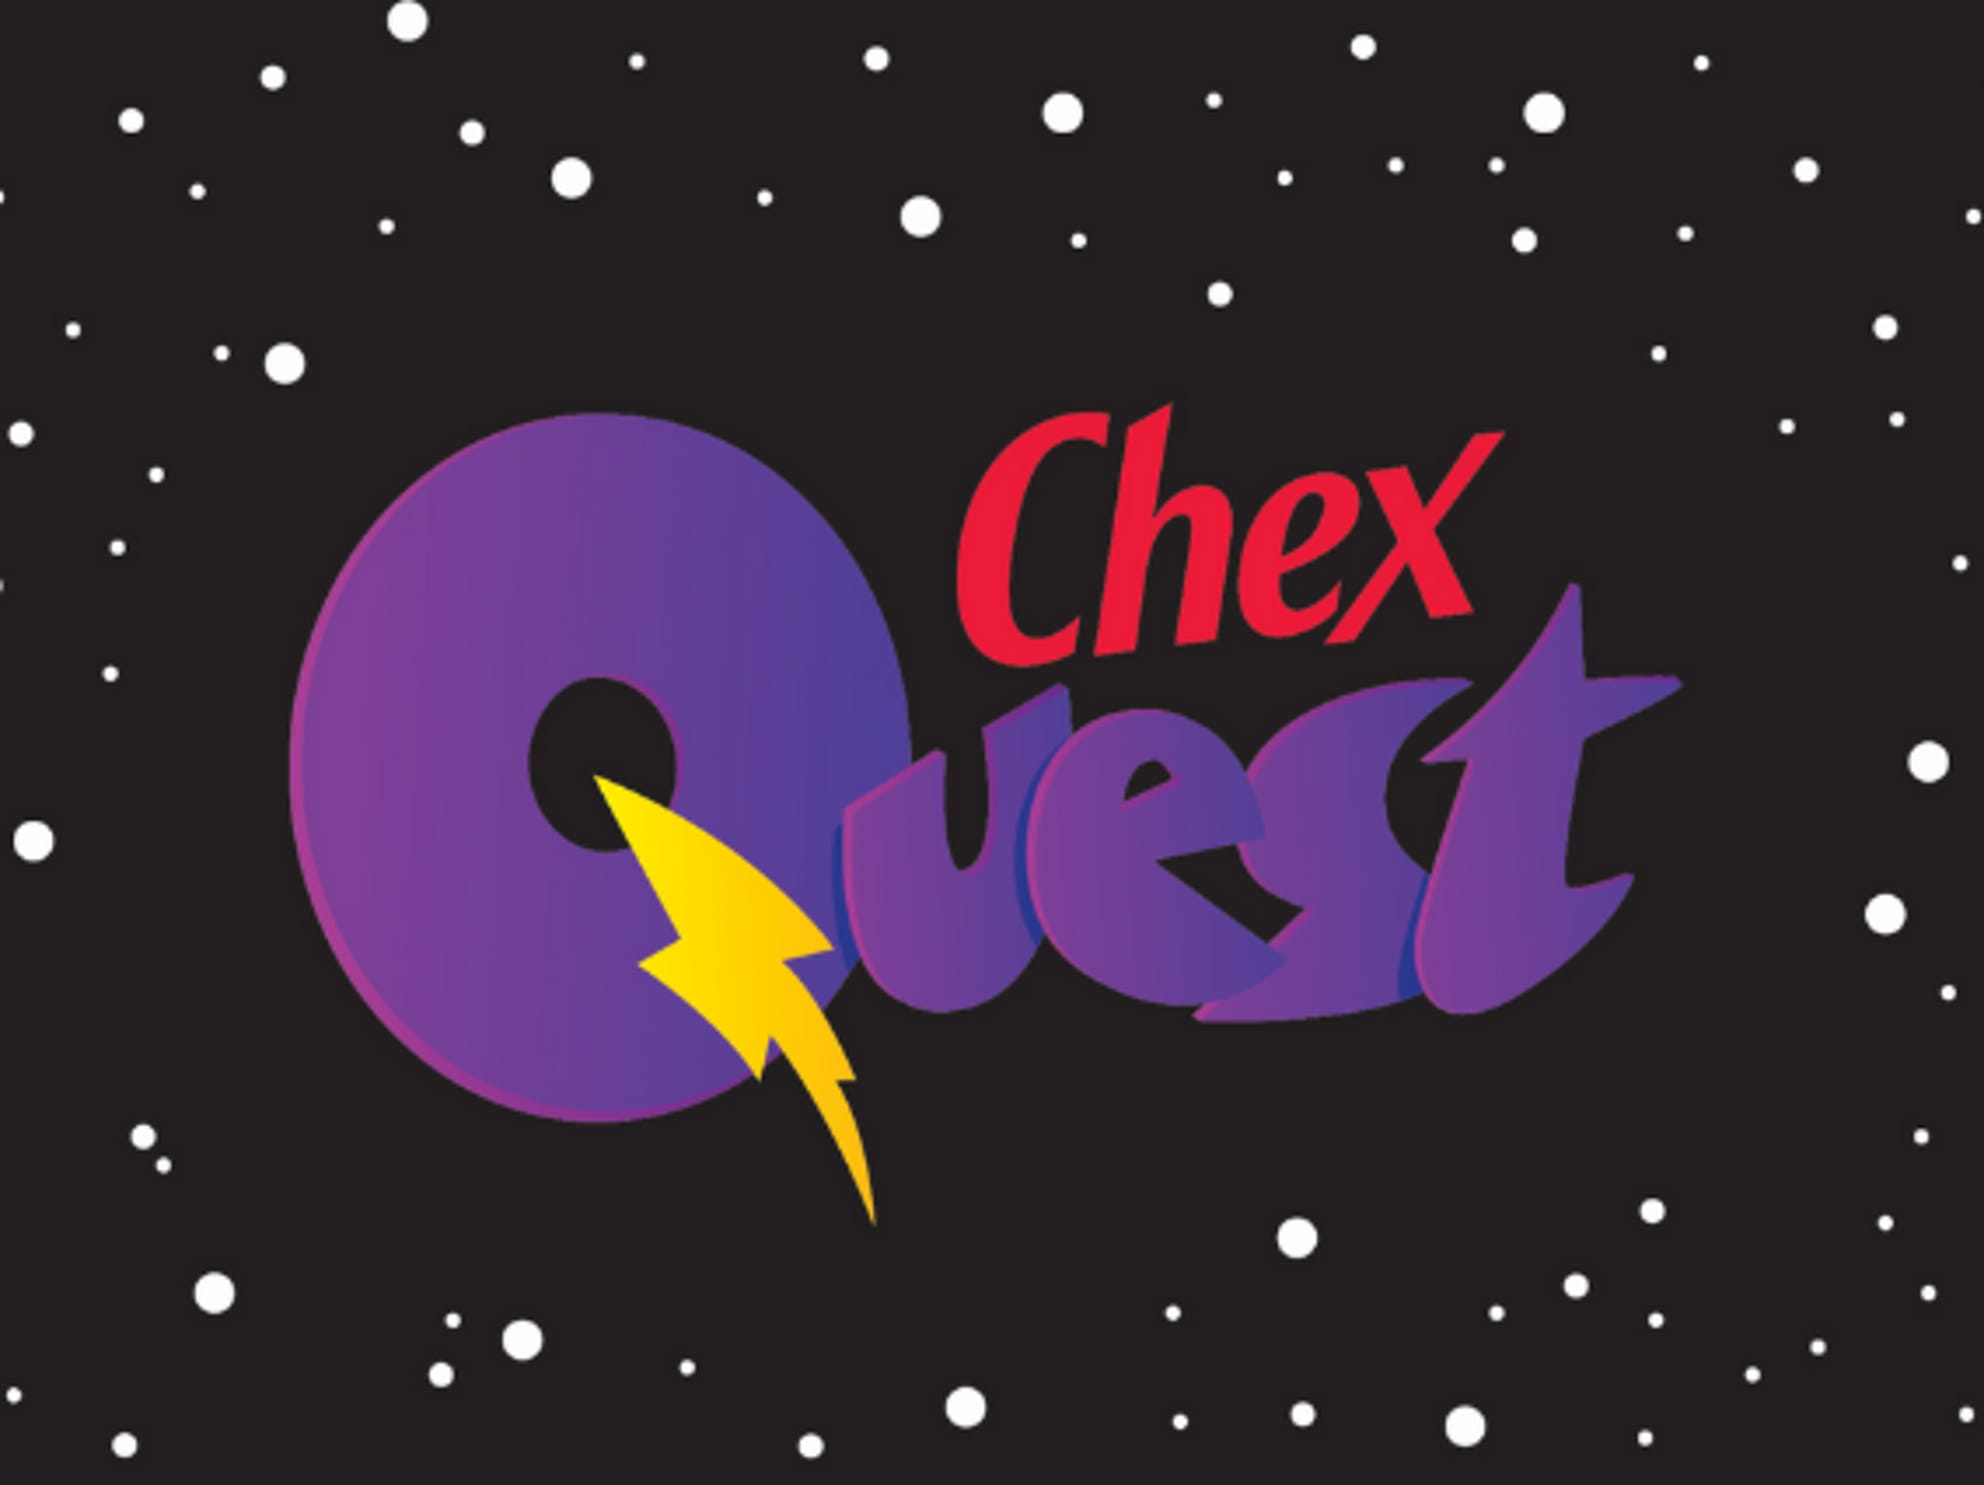 Chex Quest logo